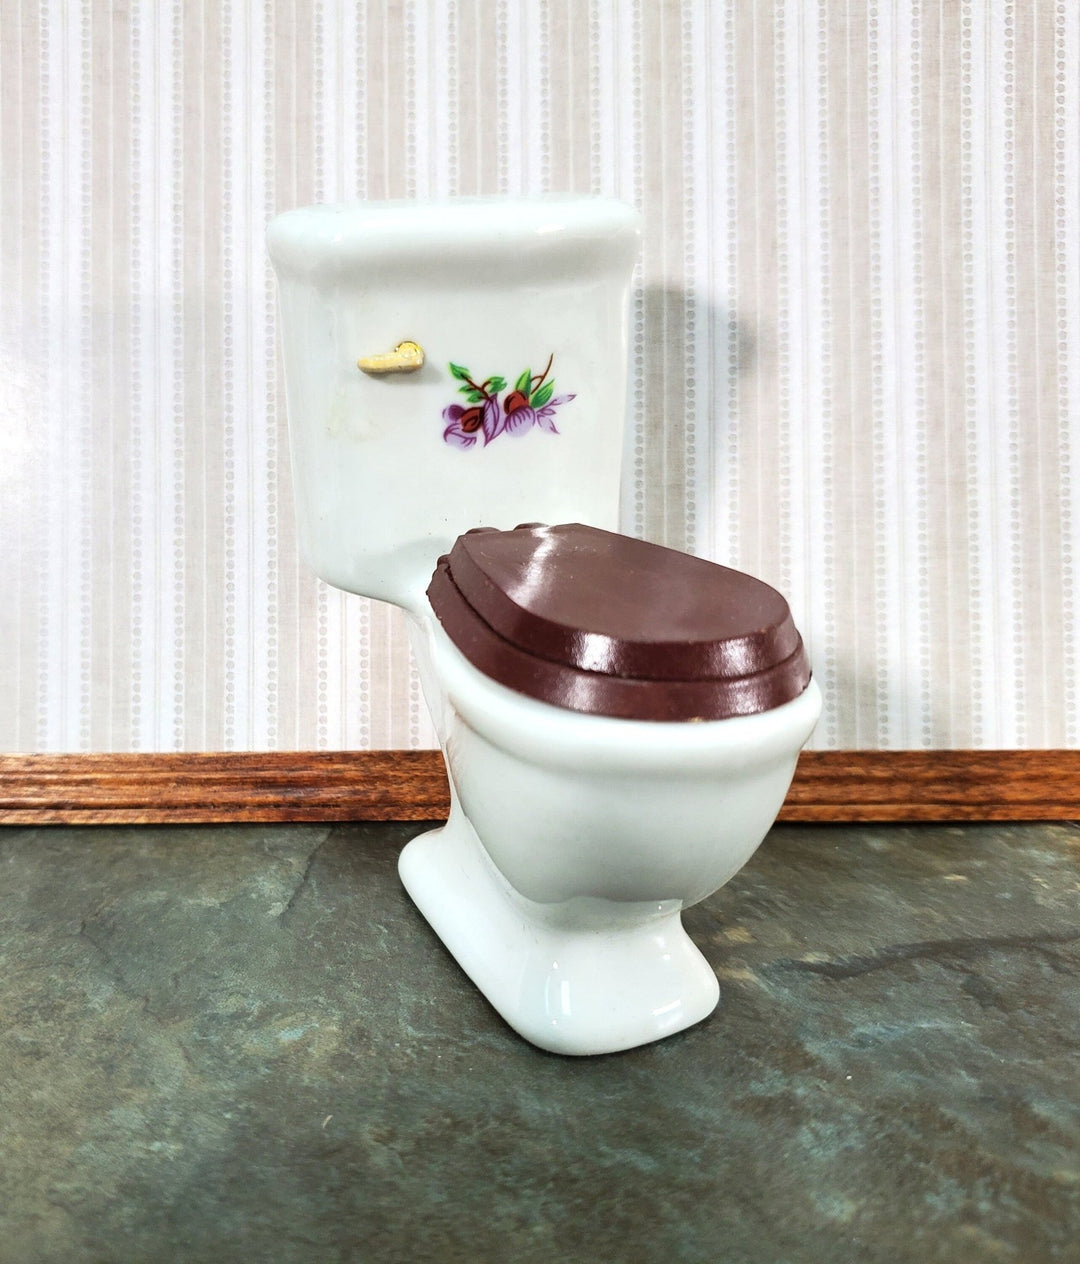 Dollhouse Miniature Toilet Plain White with Purple Flowers Ceramic for Bathroom 1:12 Scale - Miniature Crush